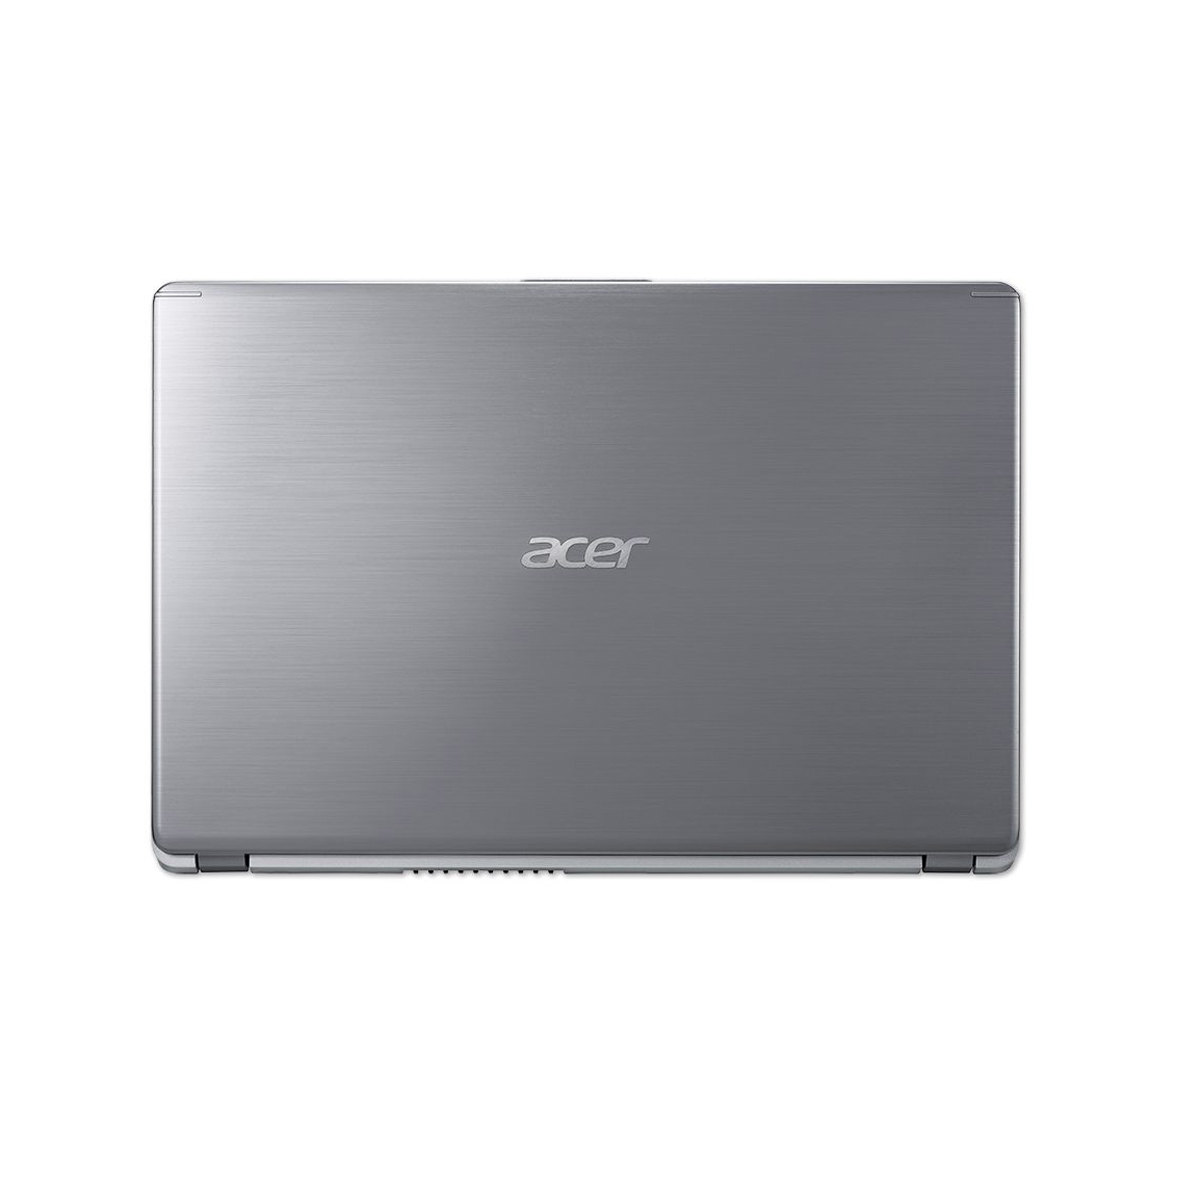 Notebook Acer A515 Core I5 8265u 4gb Ddr4 Hd 1tb Ssd 120gb Tela 15.6' Led Hd Windows 10 Home